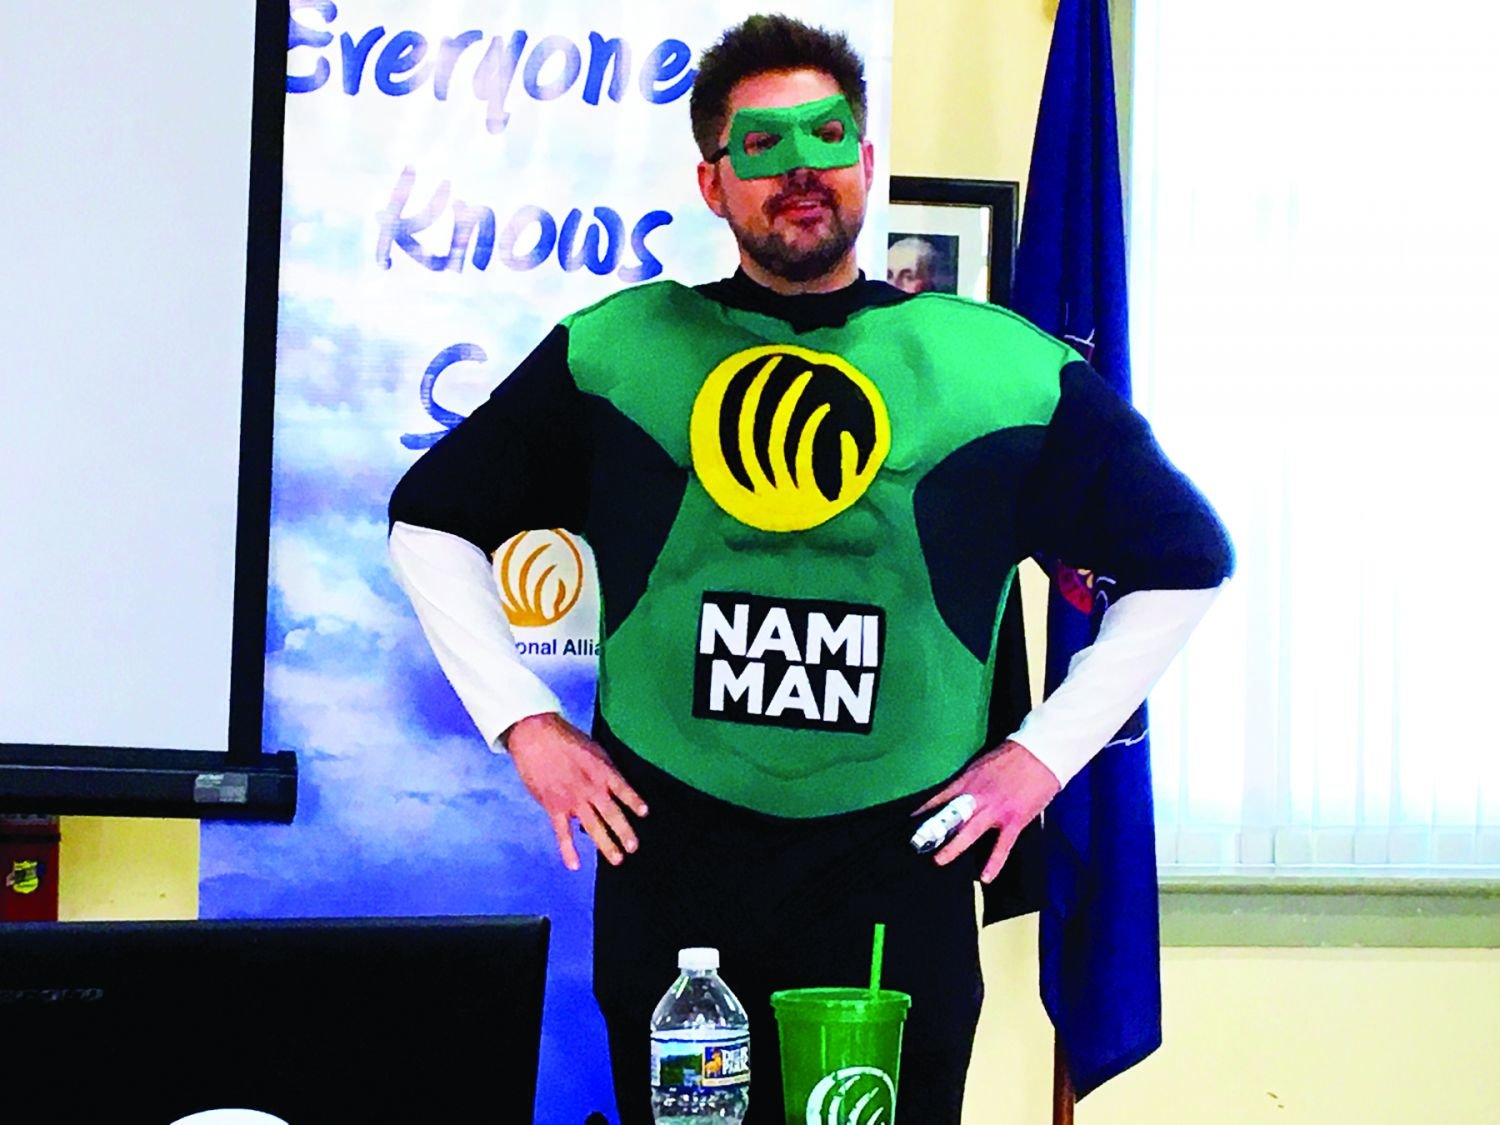 “NAMI Man” is a superhero the organization came up with to help dispel the stigma around mental illness.